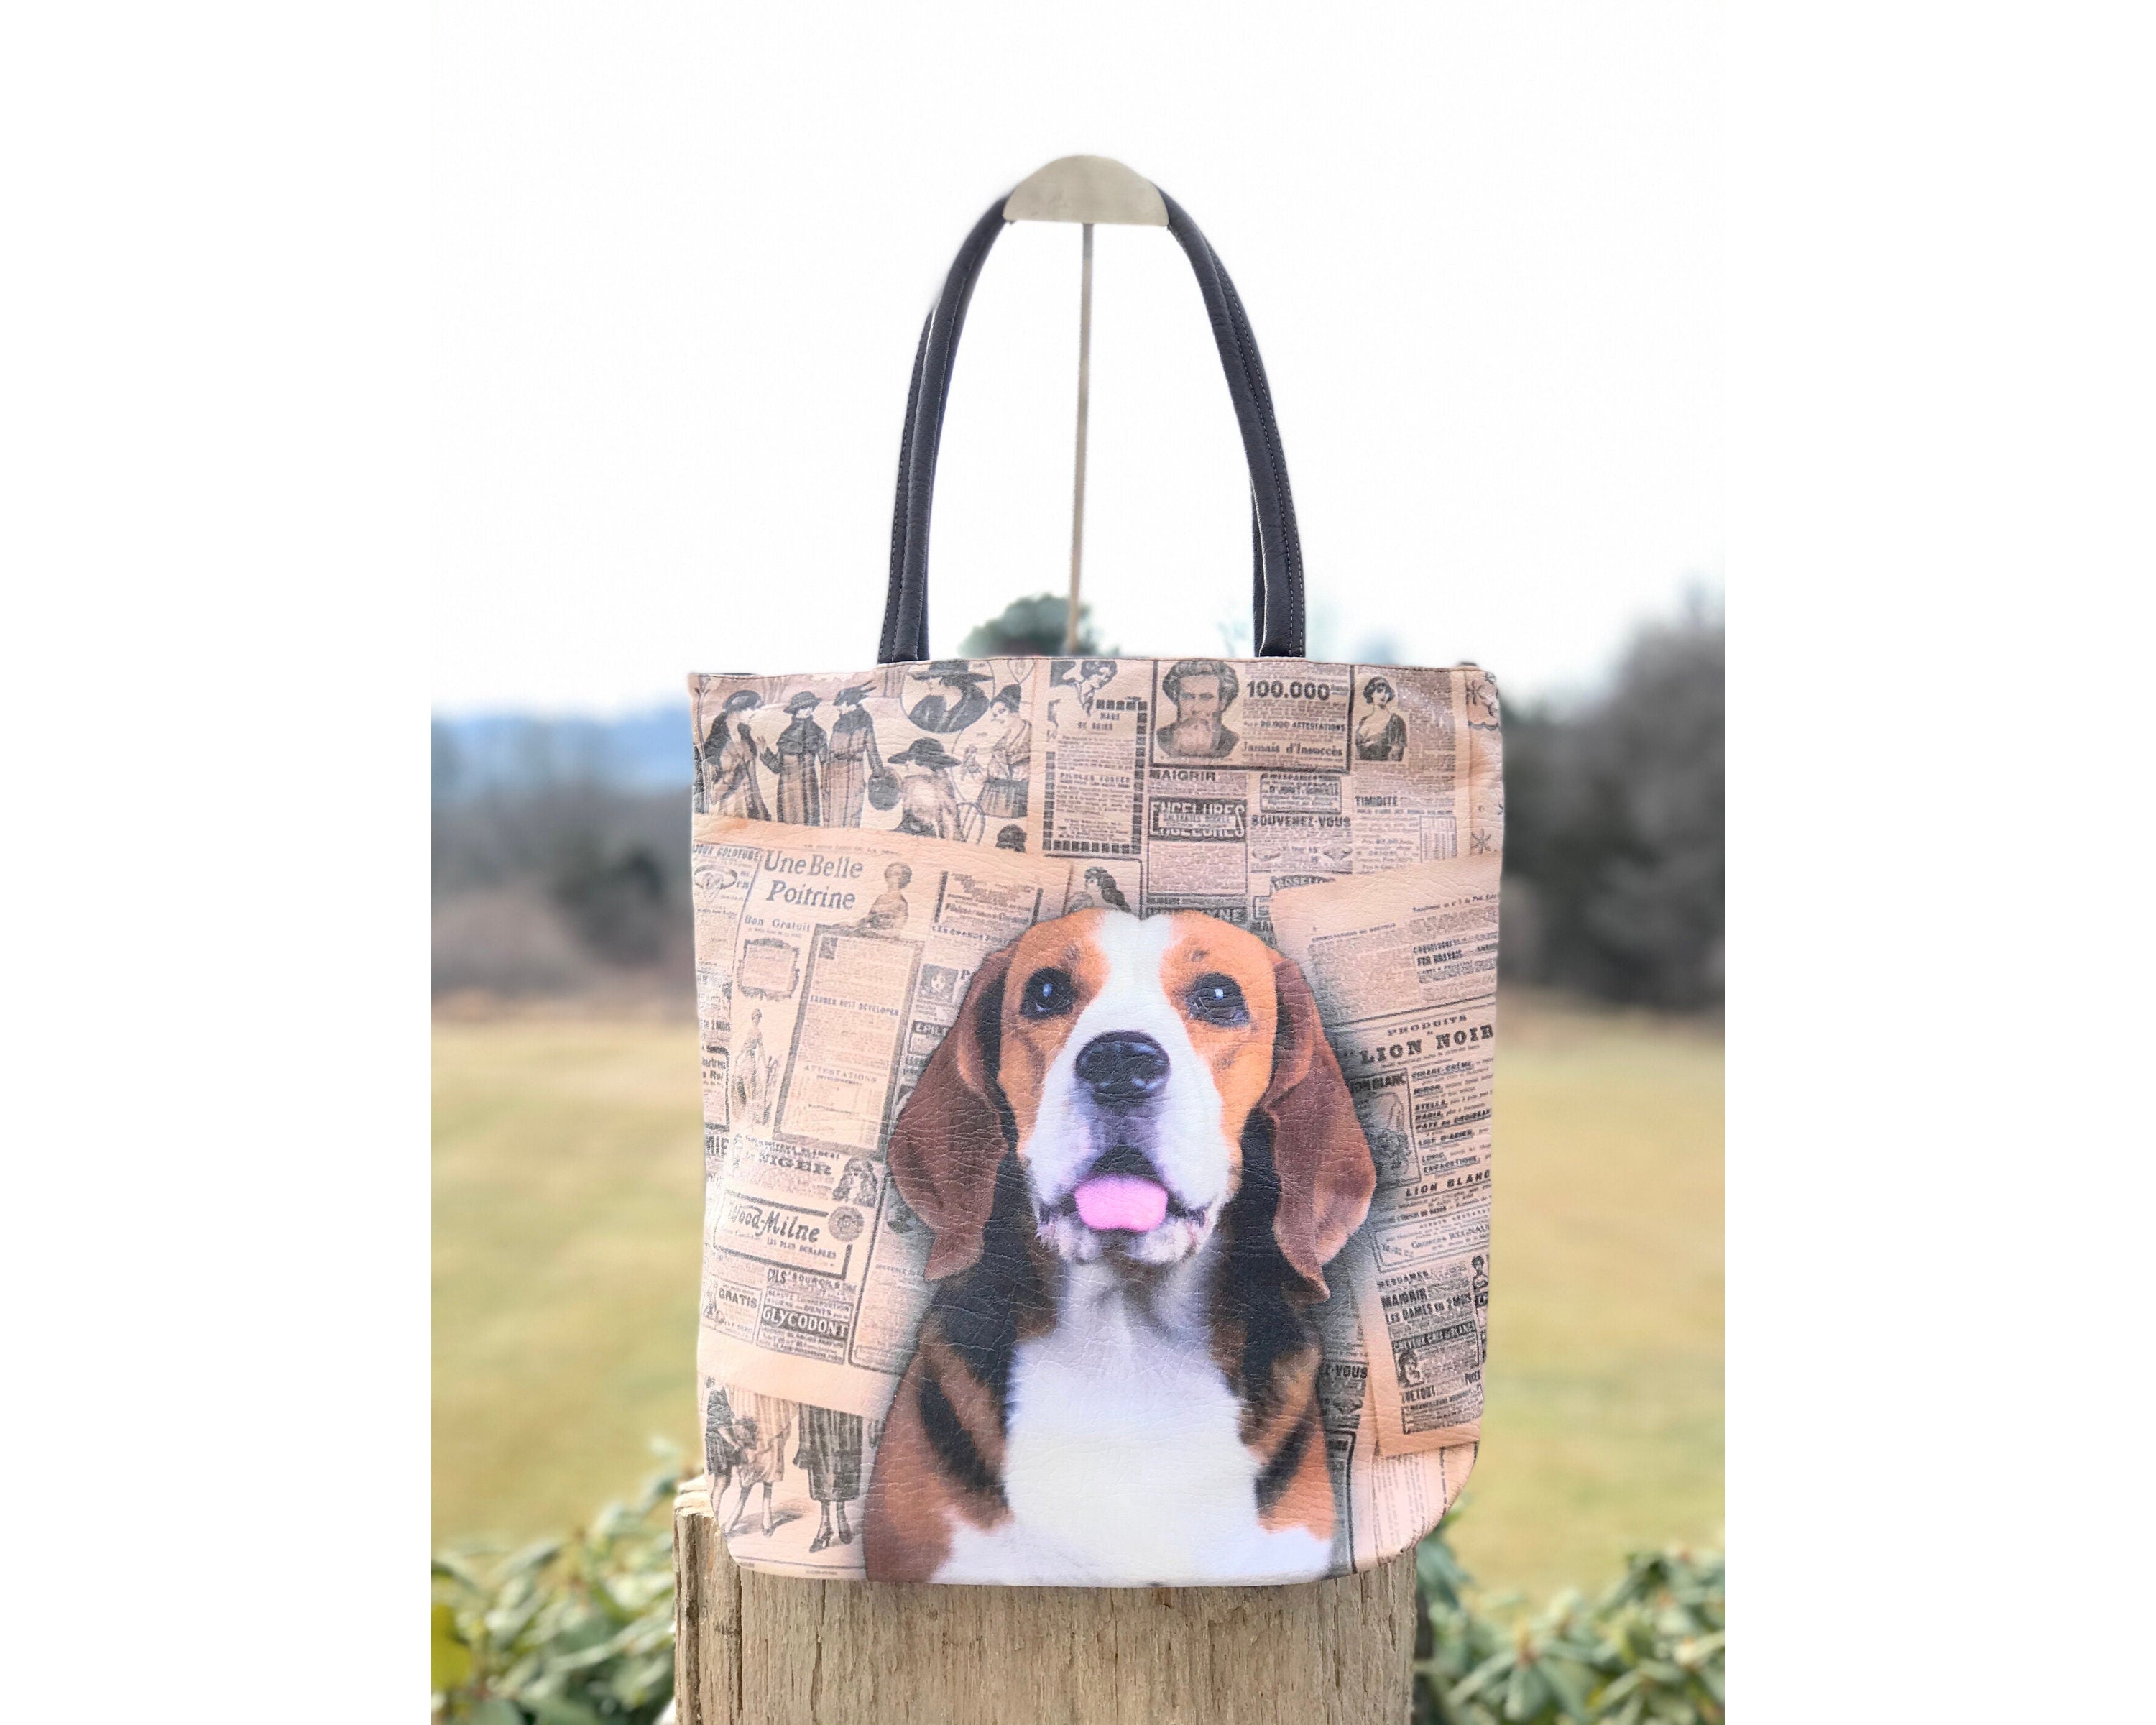 Beagle Vegan Leather Tote bag, tote bag, animal lovers, dog lover, pawies, vegan leather